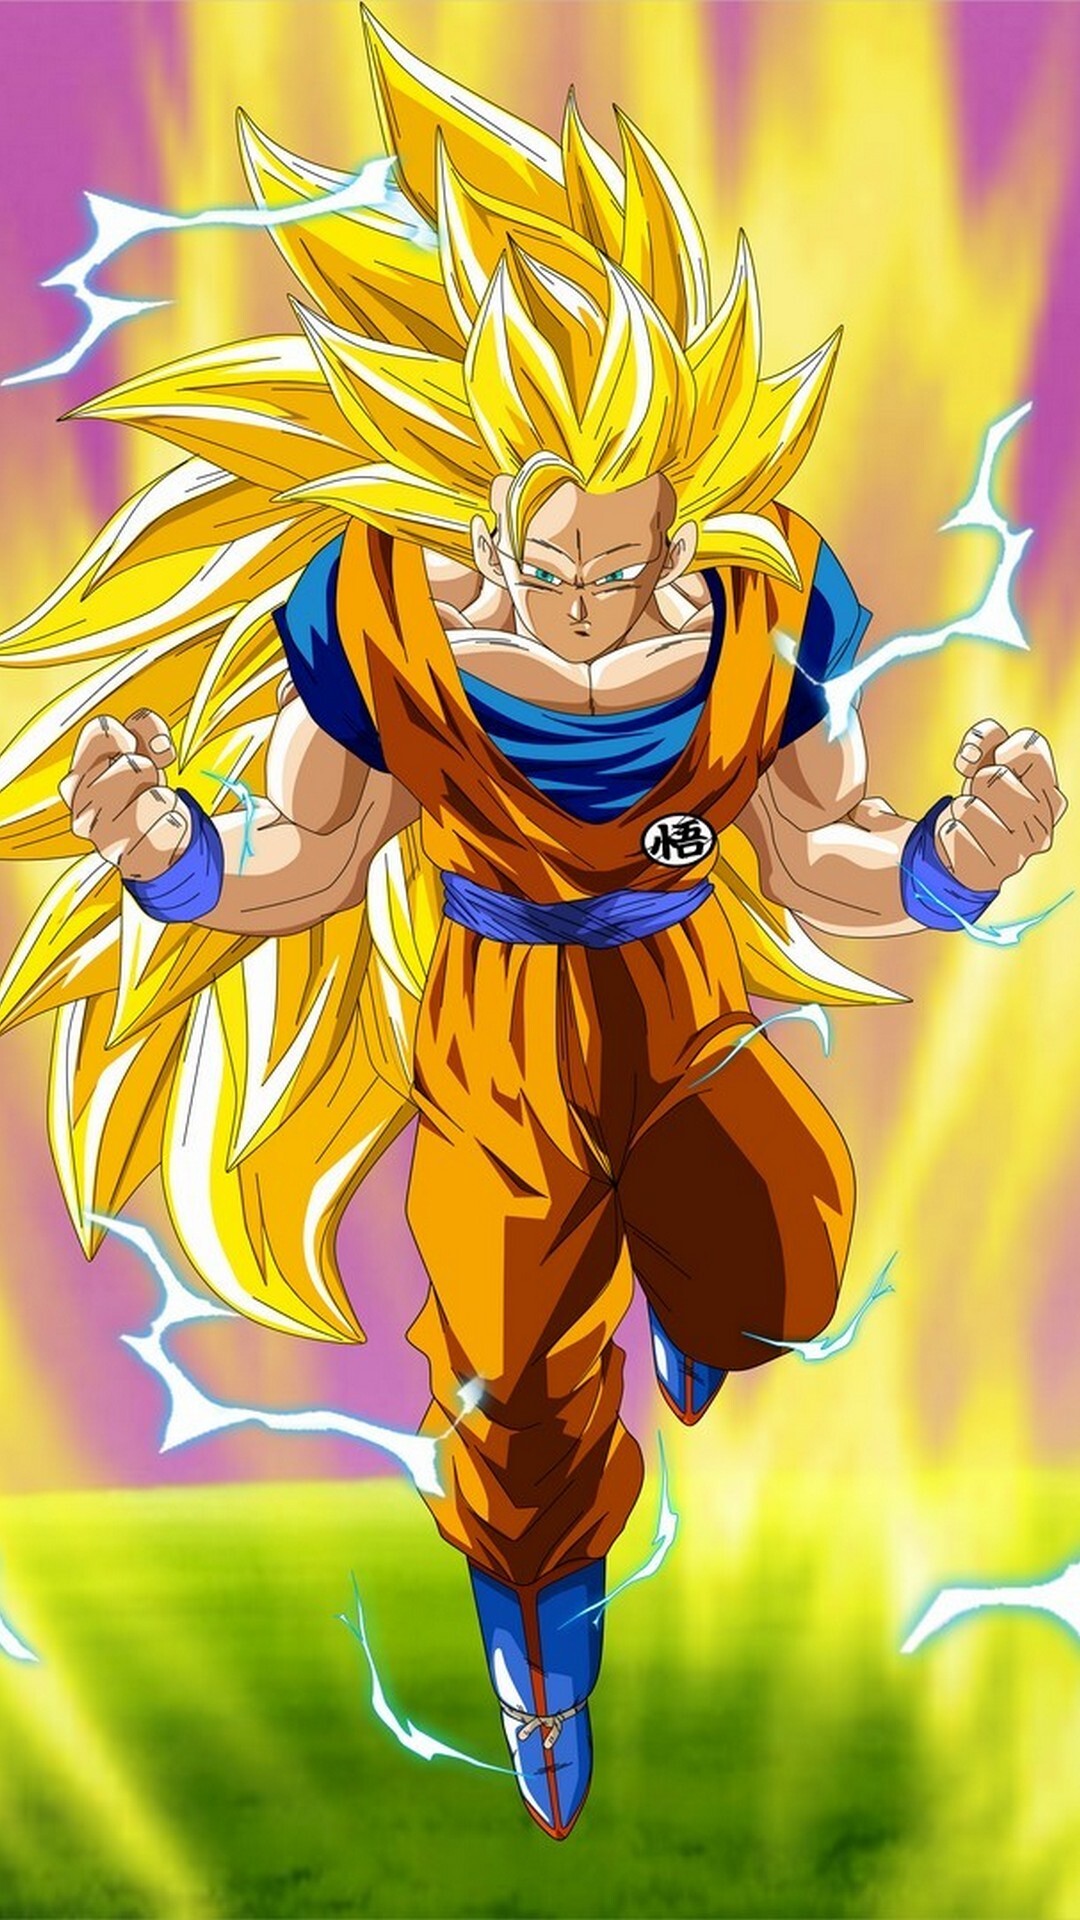 Super Saiyan 3 Goku, Powerful aura, Intense battle, Epic transformation, 1080x1920 Full HD Phone